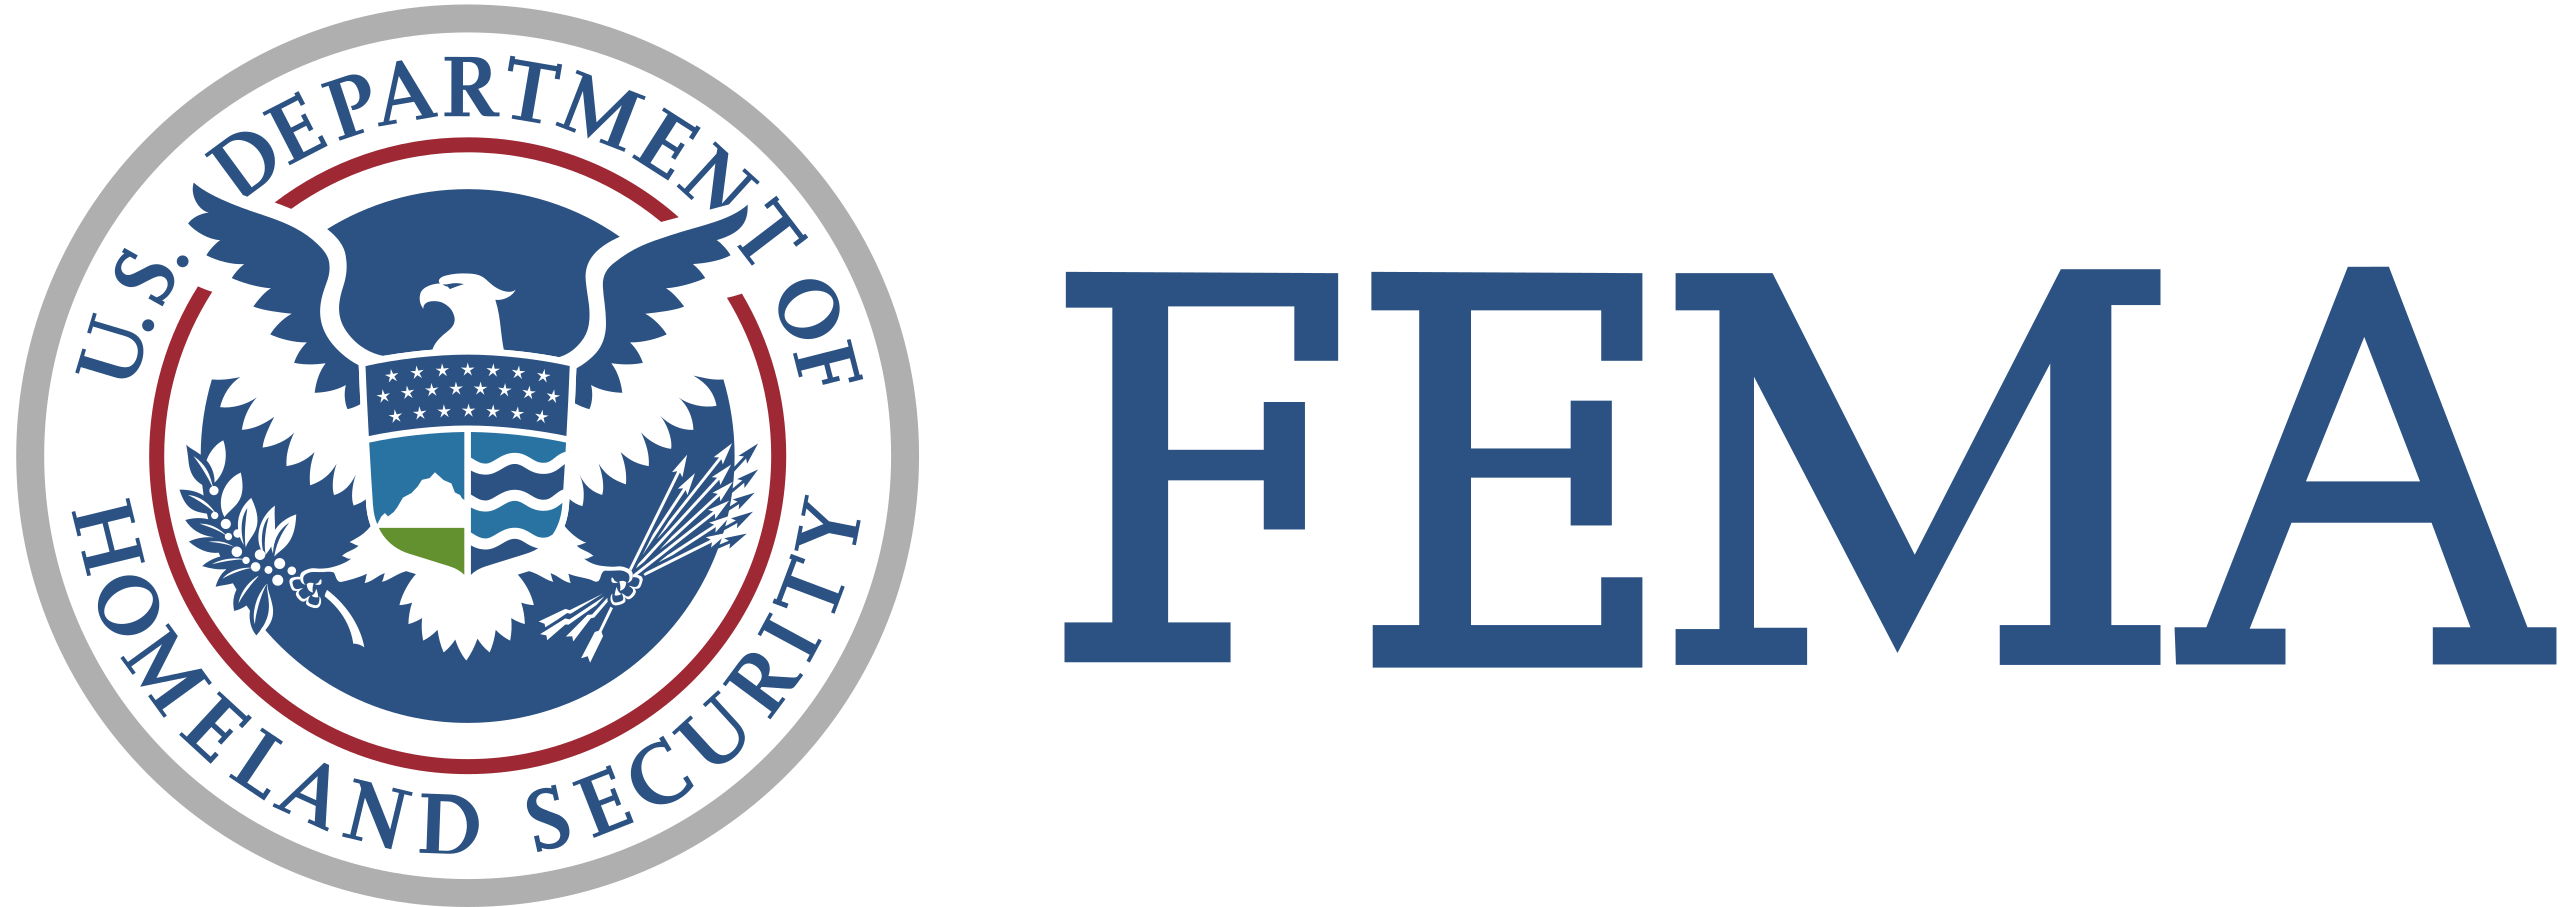 FEMA_logo.svg